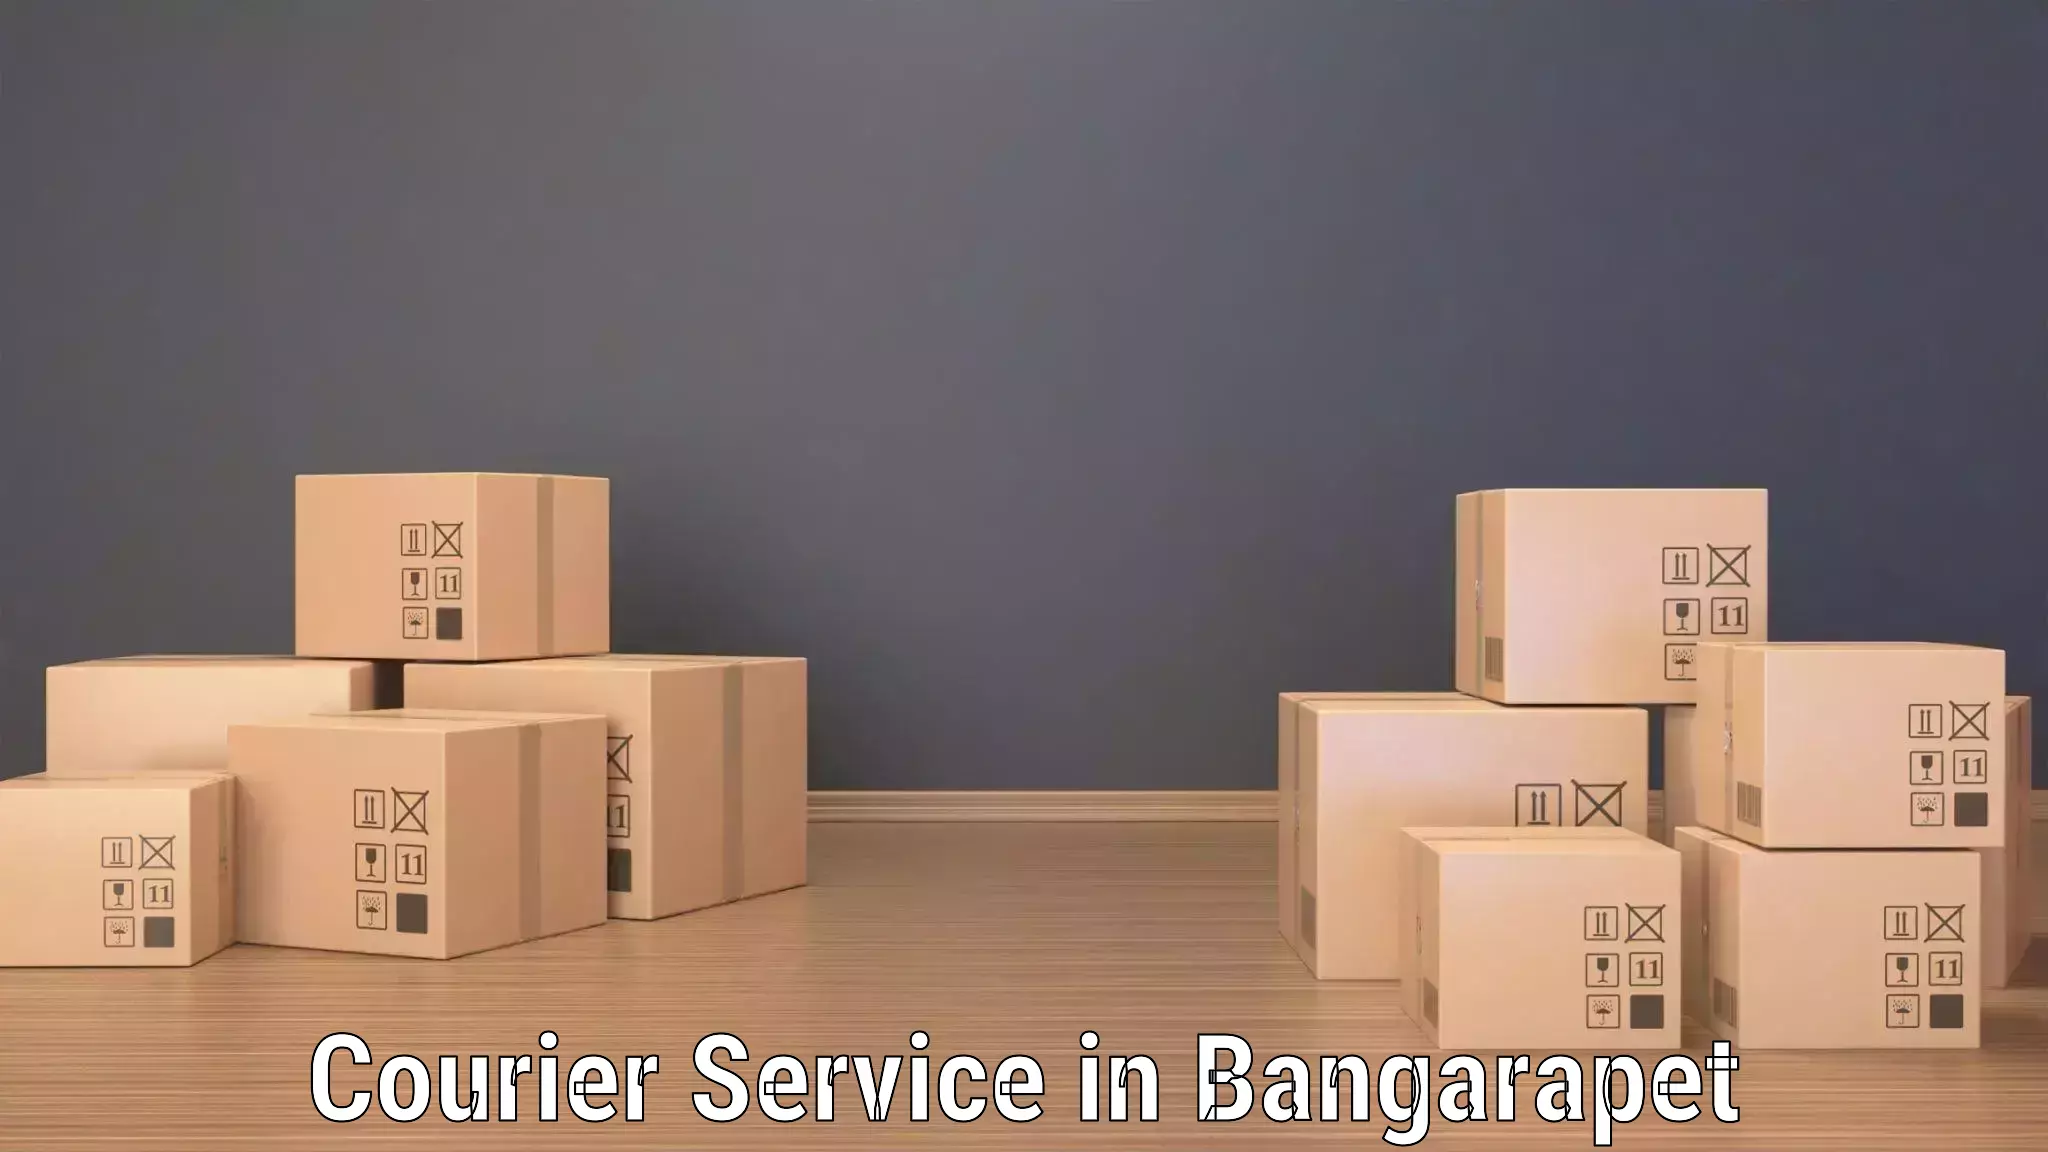 High-efficiency logistics in Bangarapet